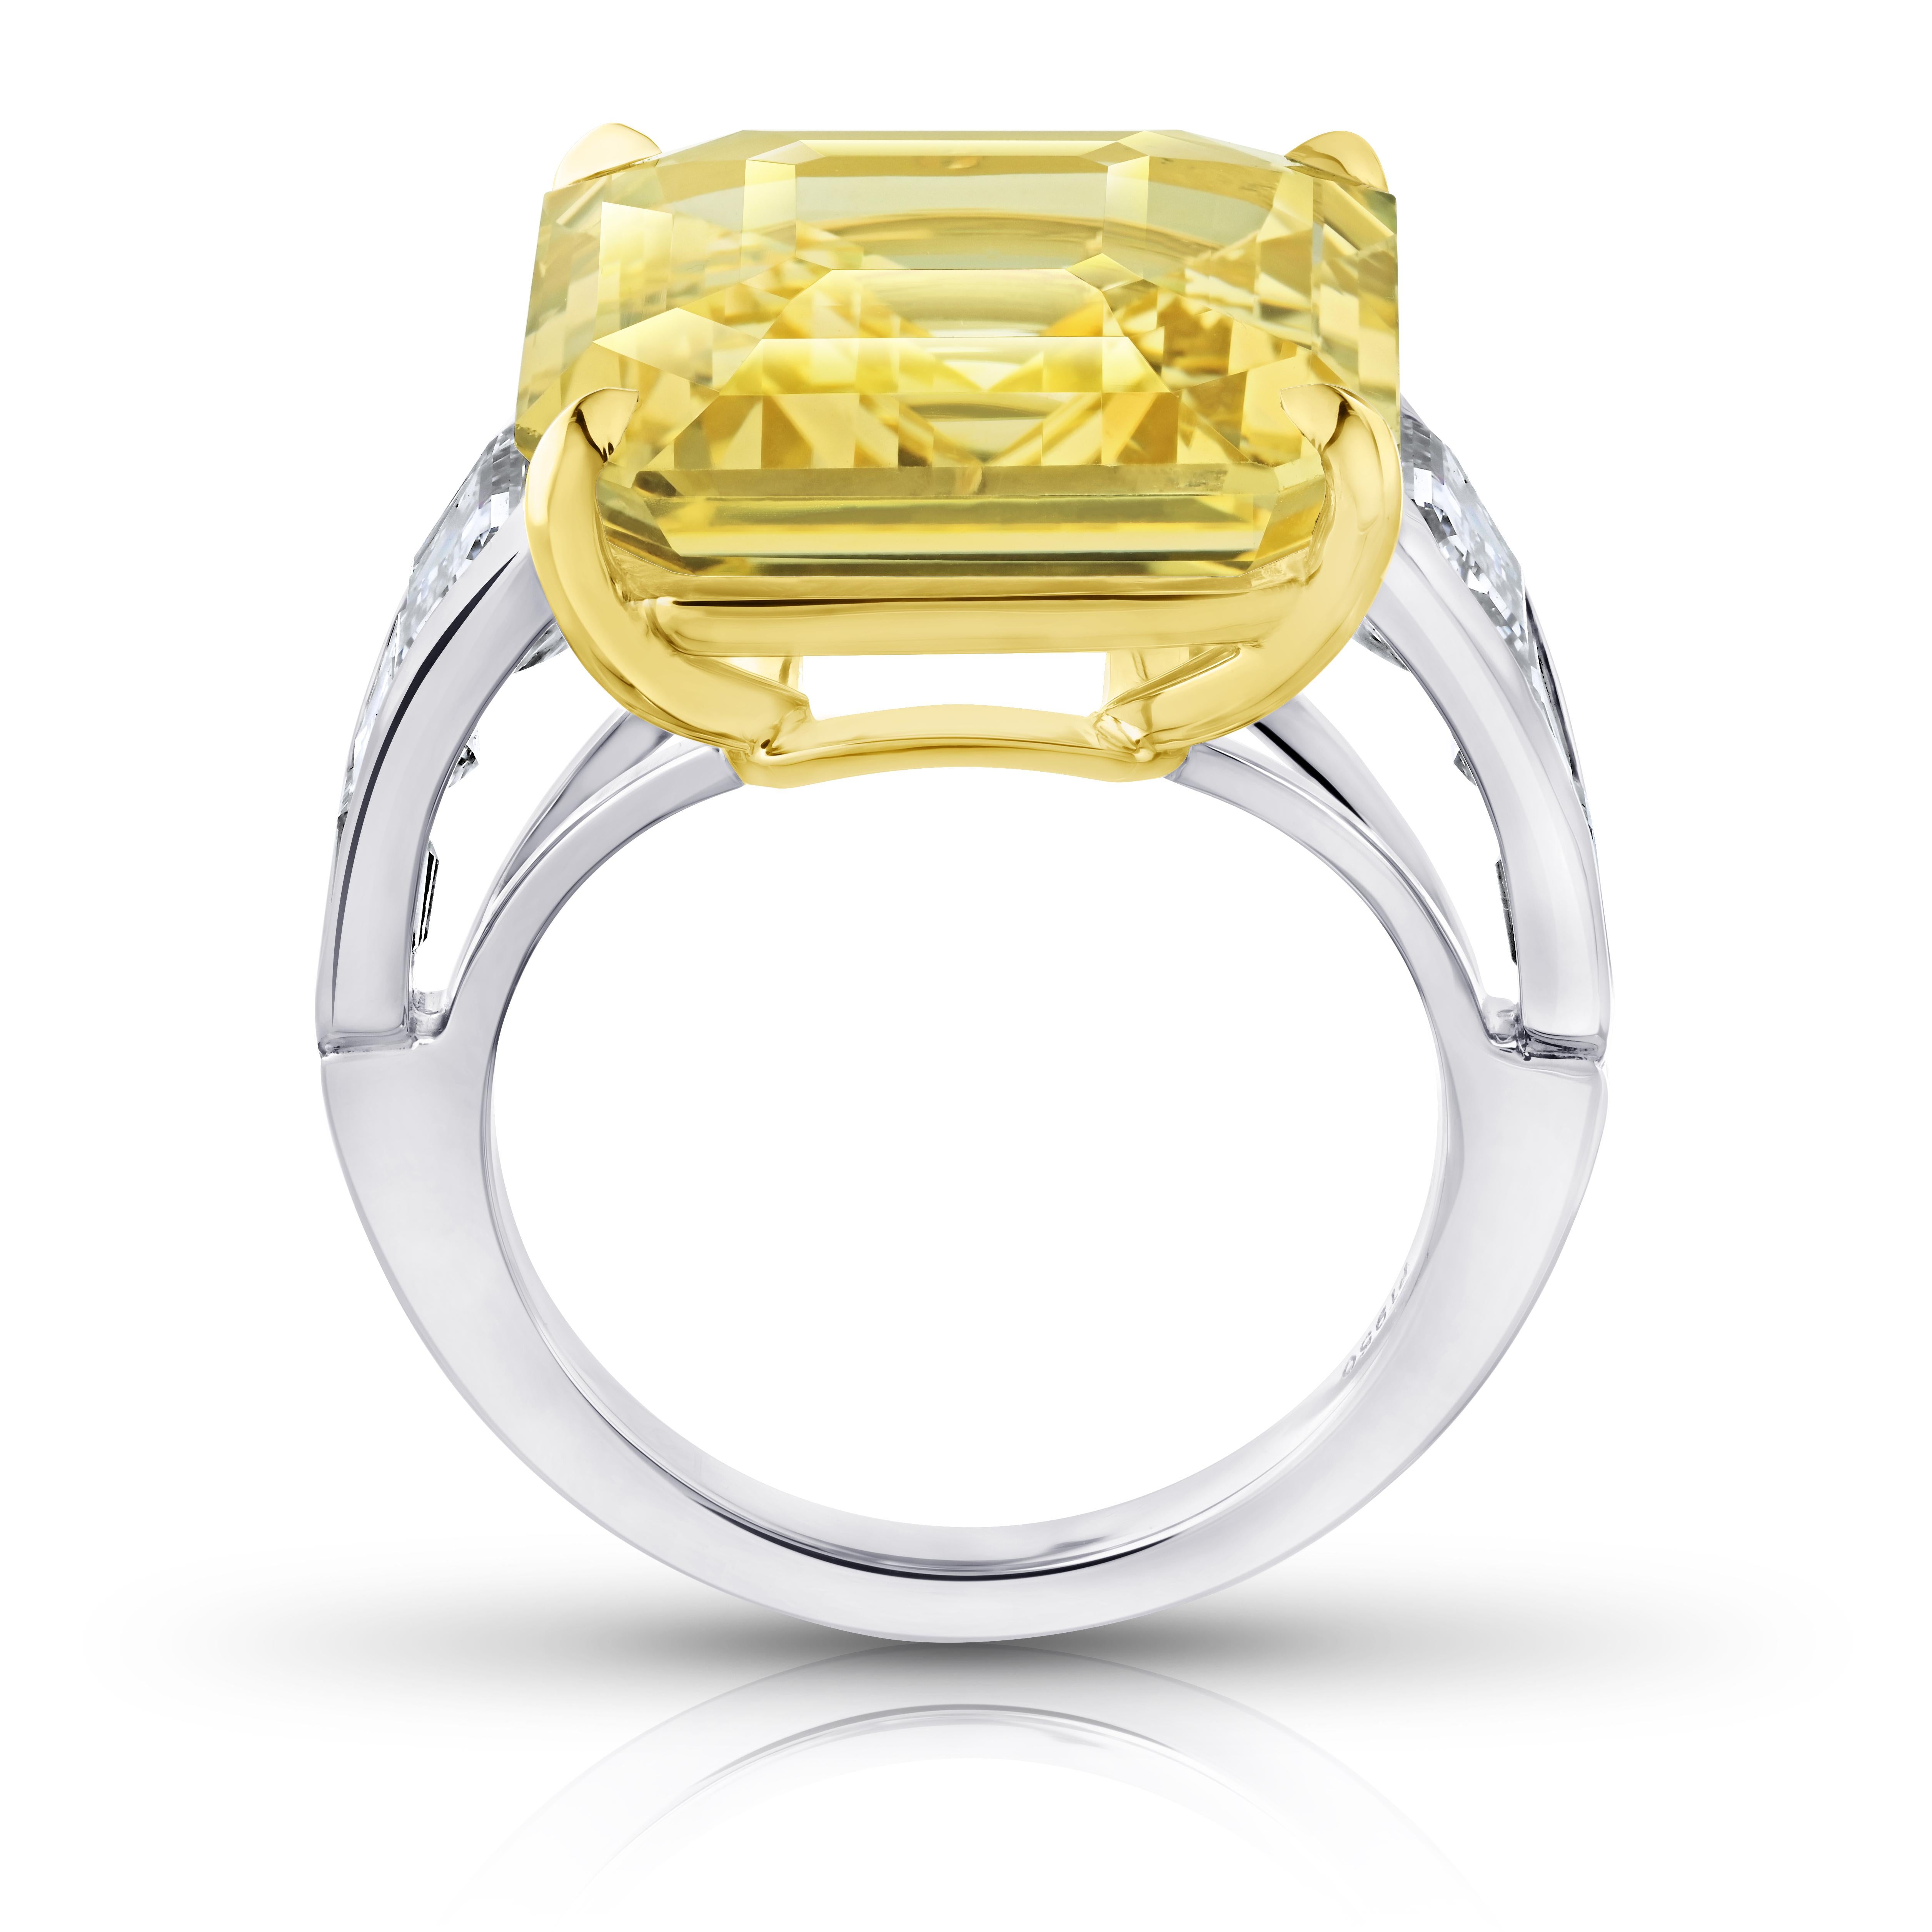 4 carat yellow sapphire ring